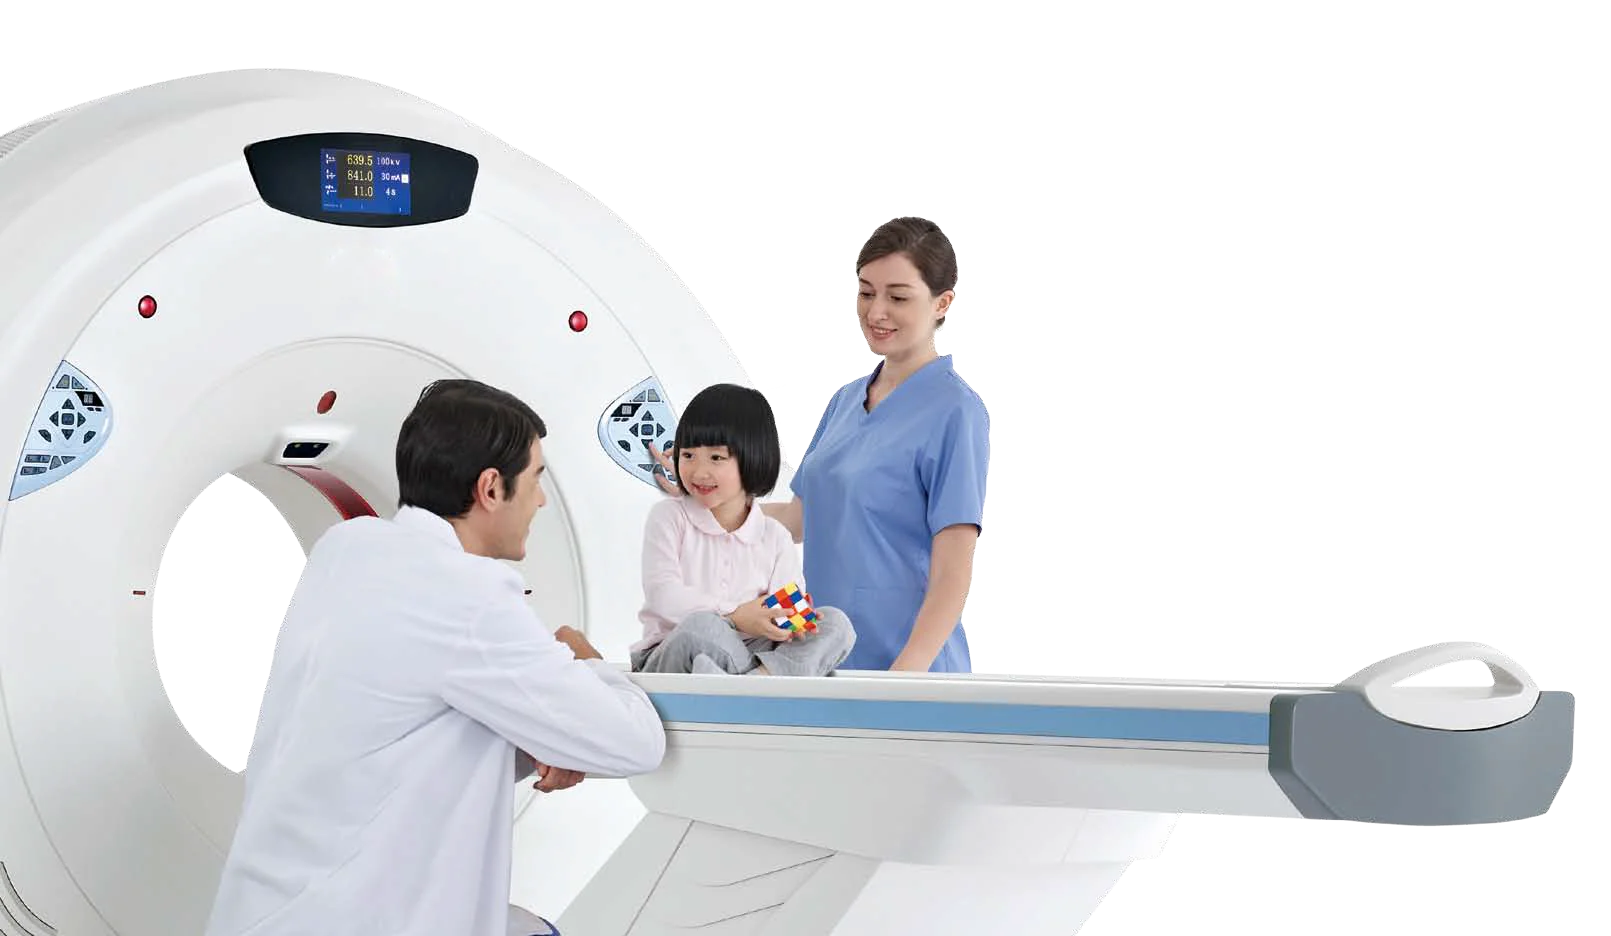 
Medical Radiology Spiral CT Scan/ 16 32 64 Slice Medical CT Scanner/ Medical Computed Tomography Scanning Machine - MSLCT series 